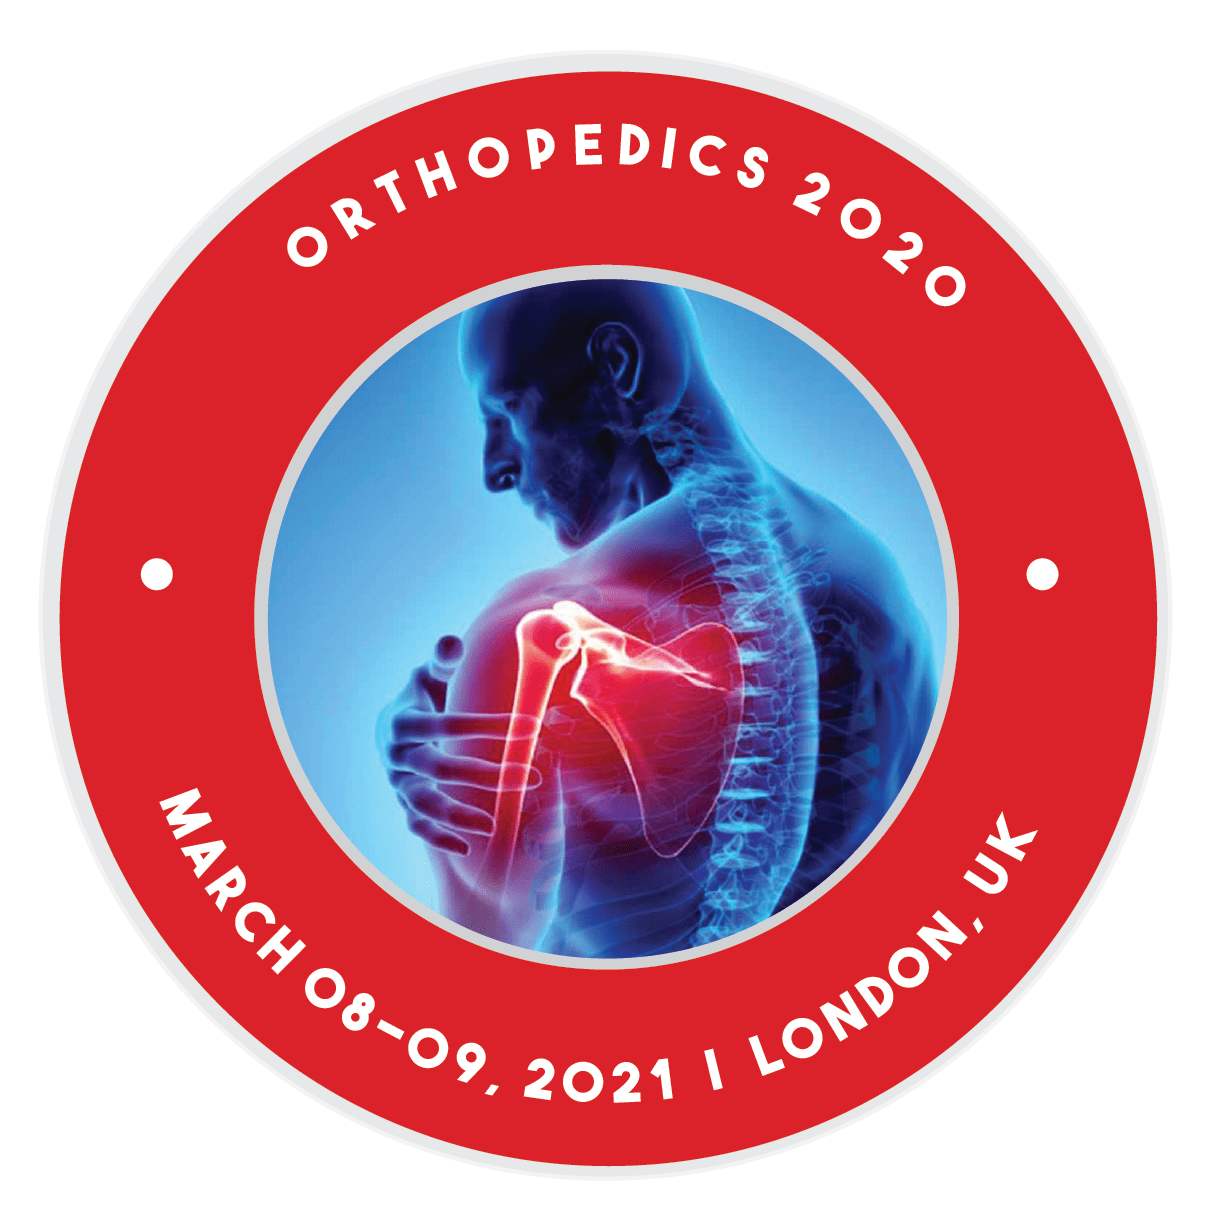 Thirteenth International Conference on Orthopedics, Osteoporosis and Trauma